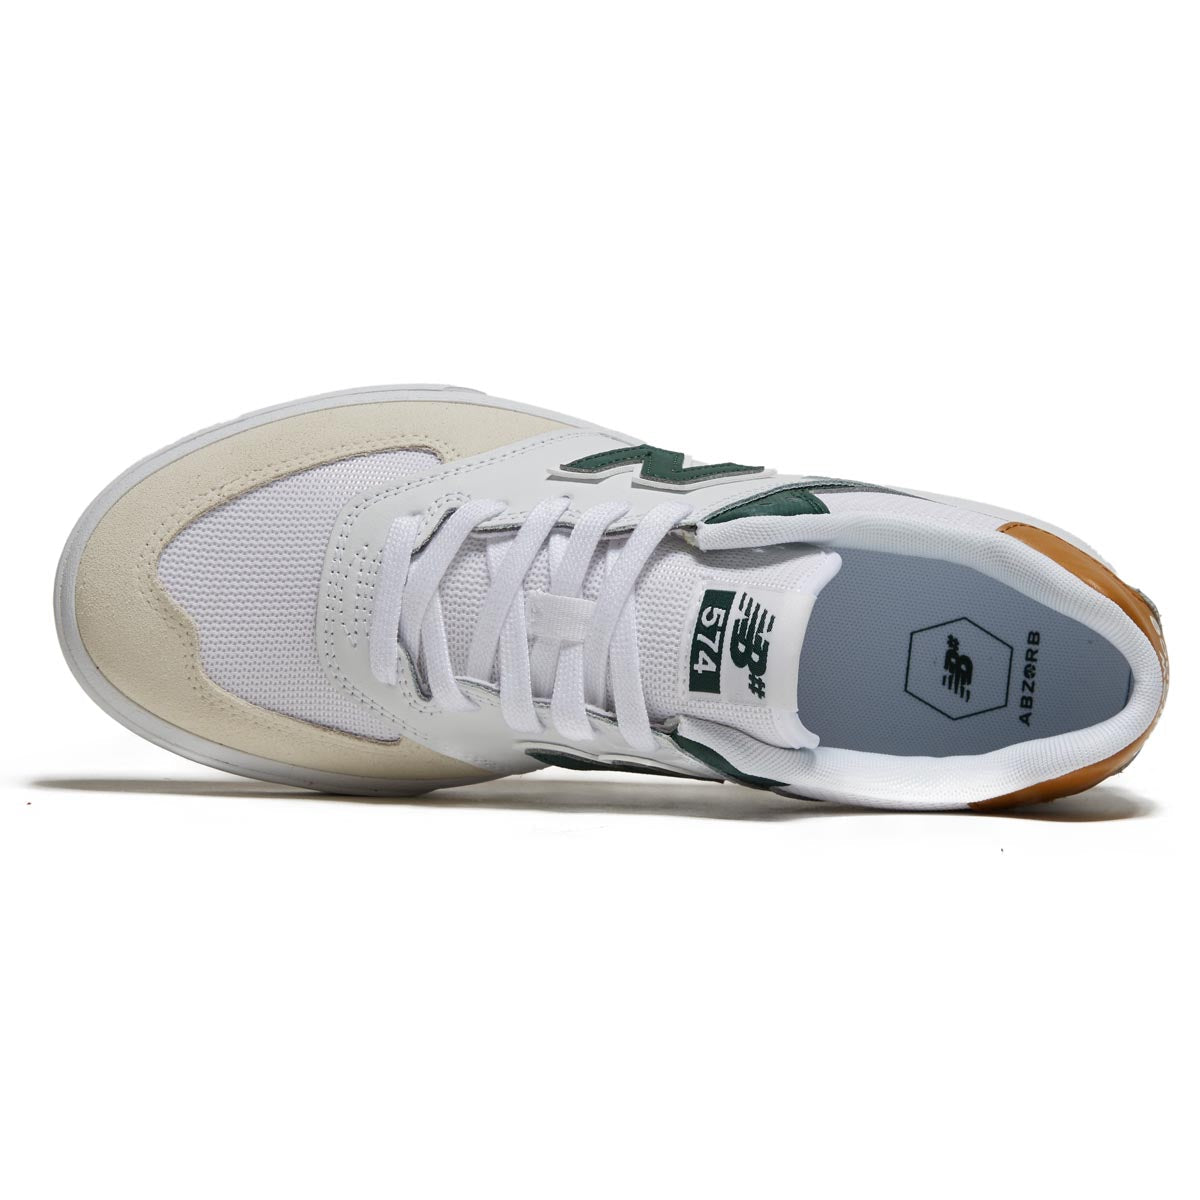 New Balance 574 Vulc Shoes - White image 3